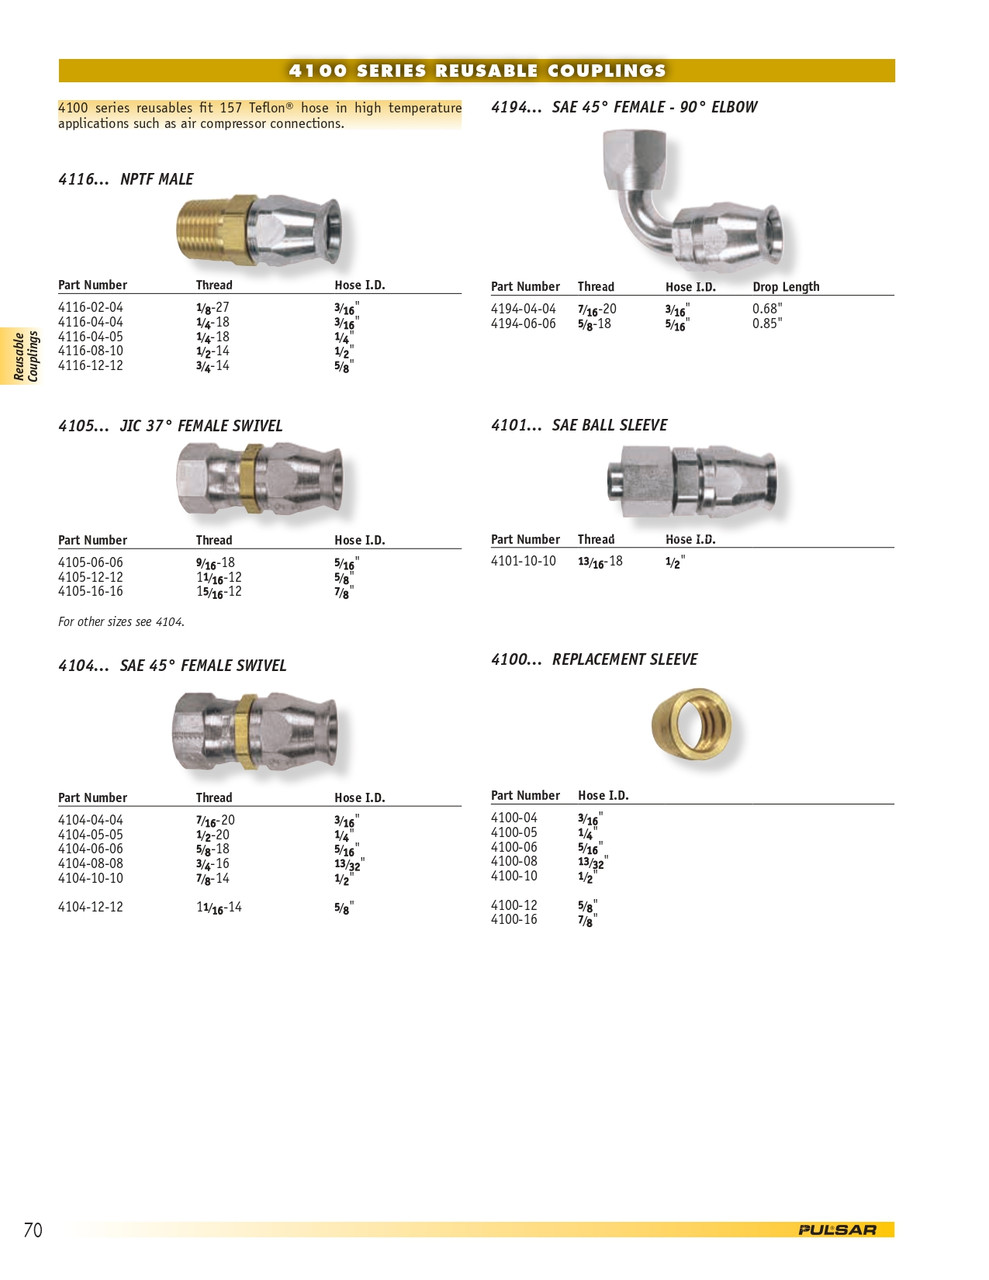 1/2 x 5/8" Pulsar 4100 Series Teflon® Reusable End - SAE Ball Sleeve  4101-10-10